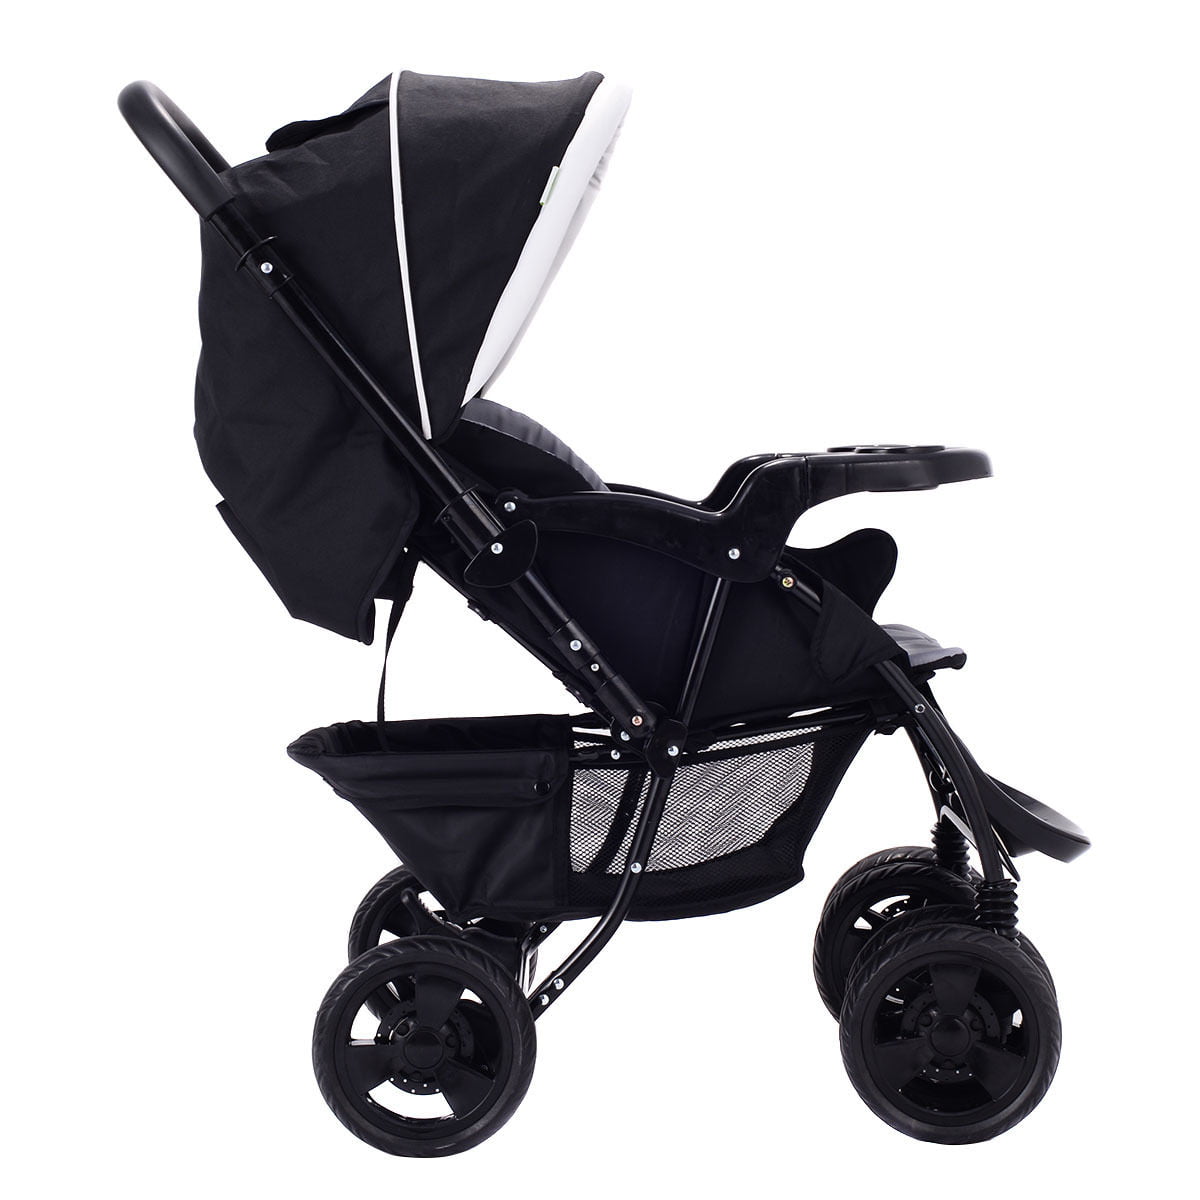 gymax 3 in 1 foldable steel travel system baby stroller pram